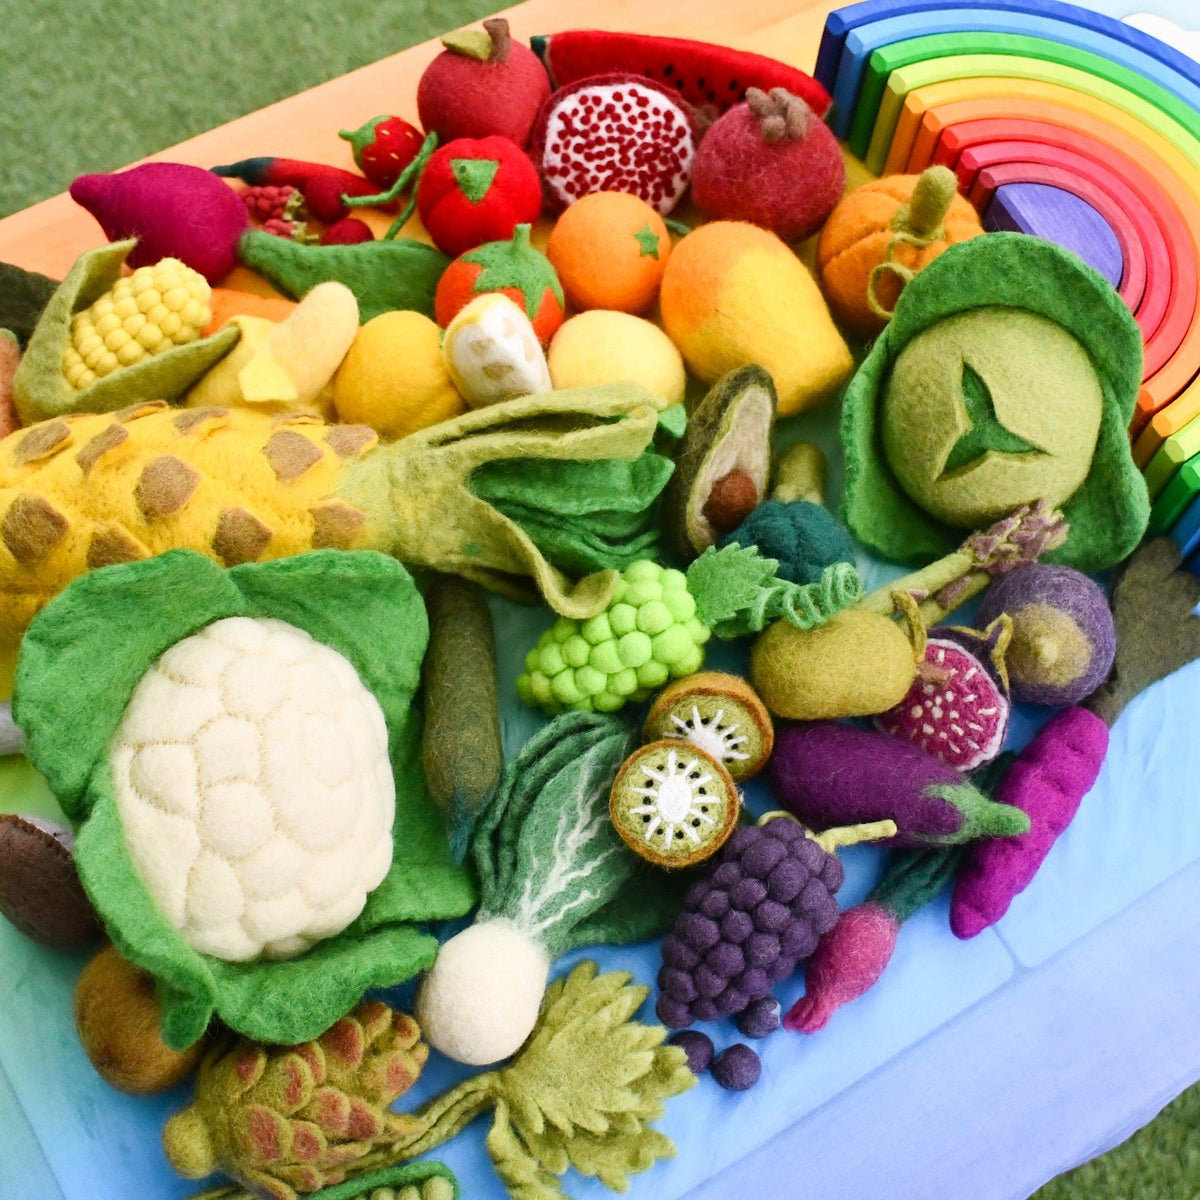 Felt Vegetables and Fruits Set - 14 pieces